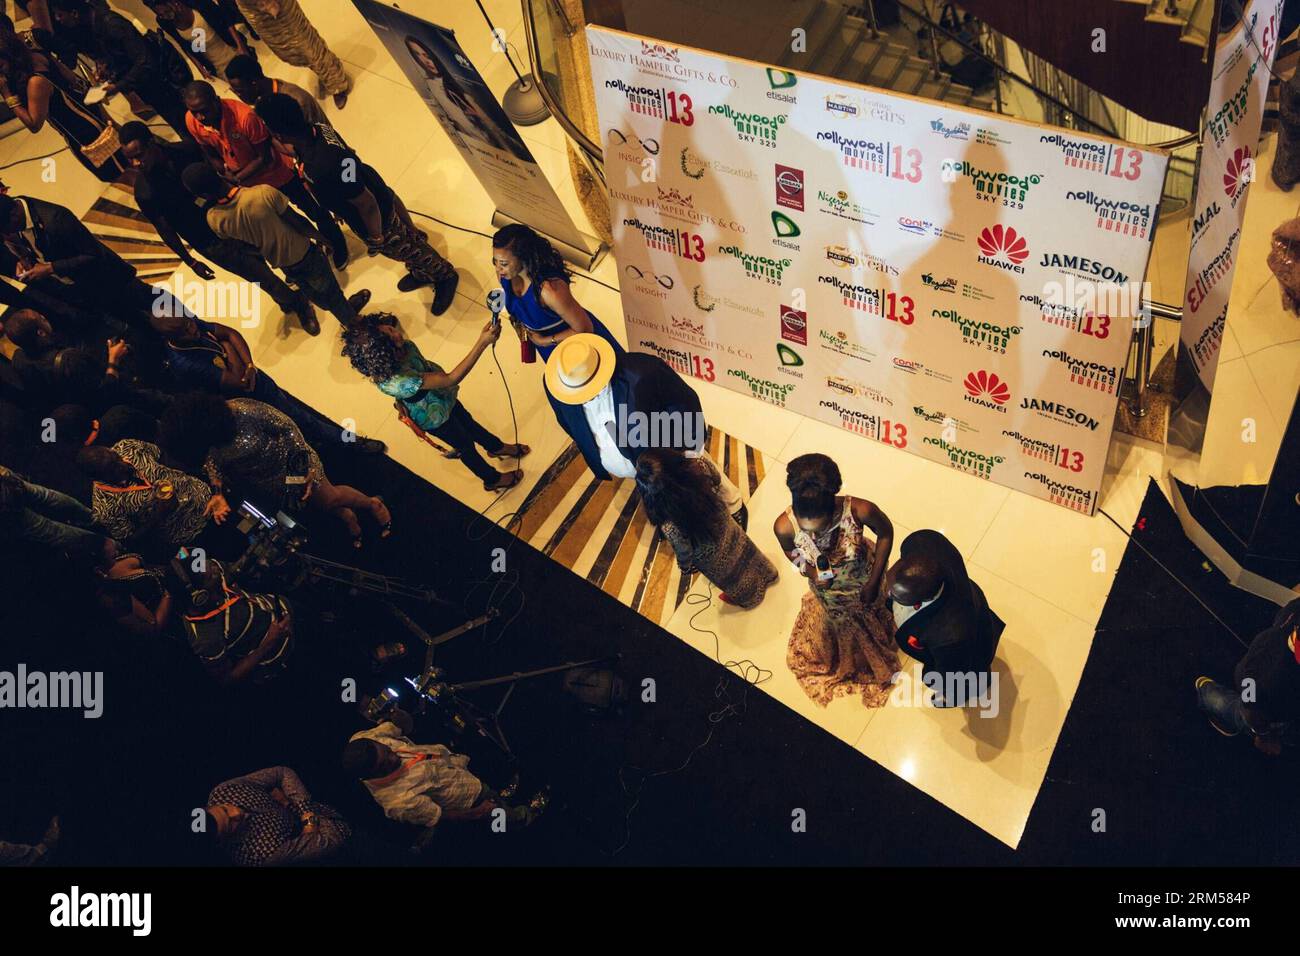 Bildnummer: 60595139 Datum: 13.10.2013 Copyright: imago/Xinhua (131013) -- LAGOS, 13. Oktober 2013 (Xinhua) -- lokale Stars und Medien nehmen am 13. Oktober 2013 an den Nollywood Movies Awards 2013 in Lagos, der Hauptstadt Nigerias, Teil. (Xinhua/Zhang Weiyi) NIGERIA-LAGOS-FILM-NOLLYWOOD-AWARDS PUBLICATIONxNOTxINxCHN People xcb x0x 2013 quer premiumd 60595139 Datum 13 10 2013 Copyright Imago XINHUA Lagos OKT 13 2013 XINHUA Local Stars and Media nehmen AM 13. Oktober 2013 an den Filmpreisen 2013 in Lagos Capital of Nigeria Teil XINHUA Zhang Weiyi Nigeria Lagos Film Awards PUBLICATIONxNOTxINxCHN Celebrities x0x 2013 Stockfoto